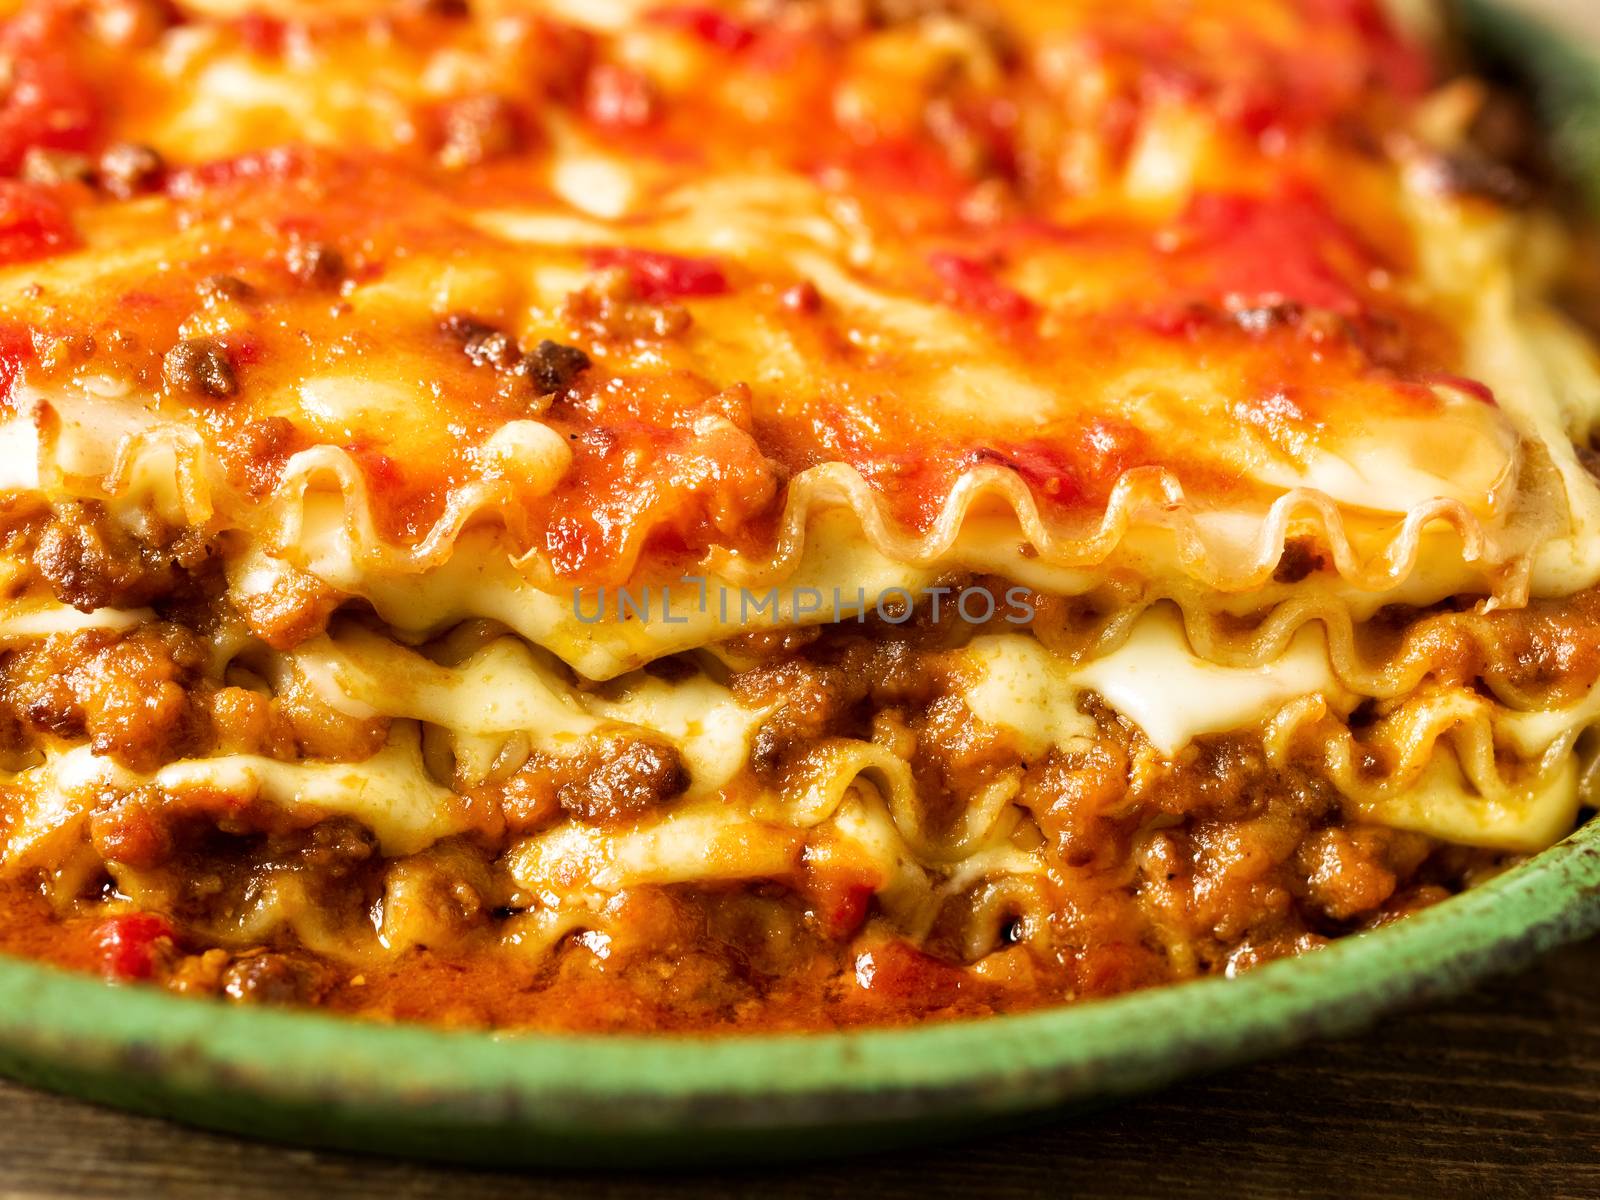 rustic italian cheesy lasagna pasta by zkruger